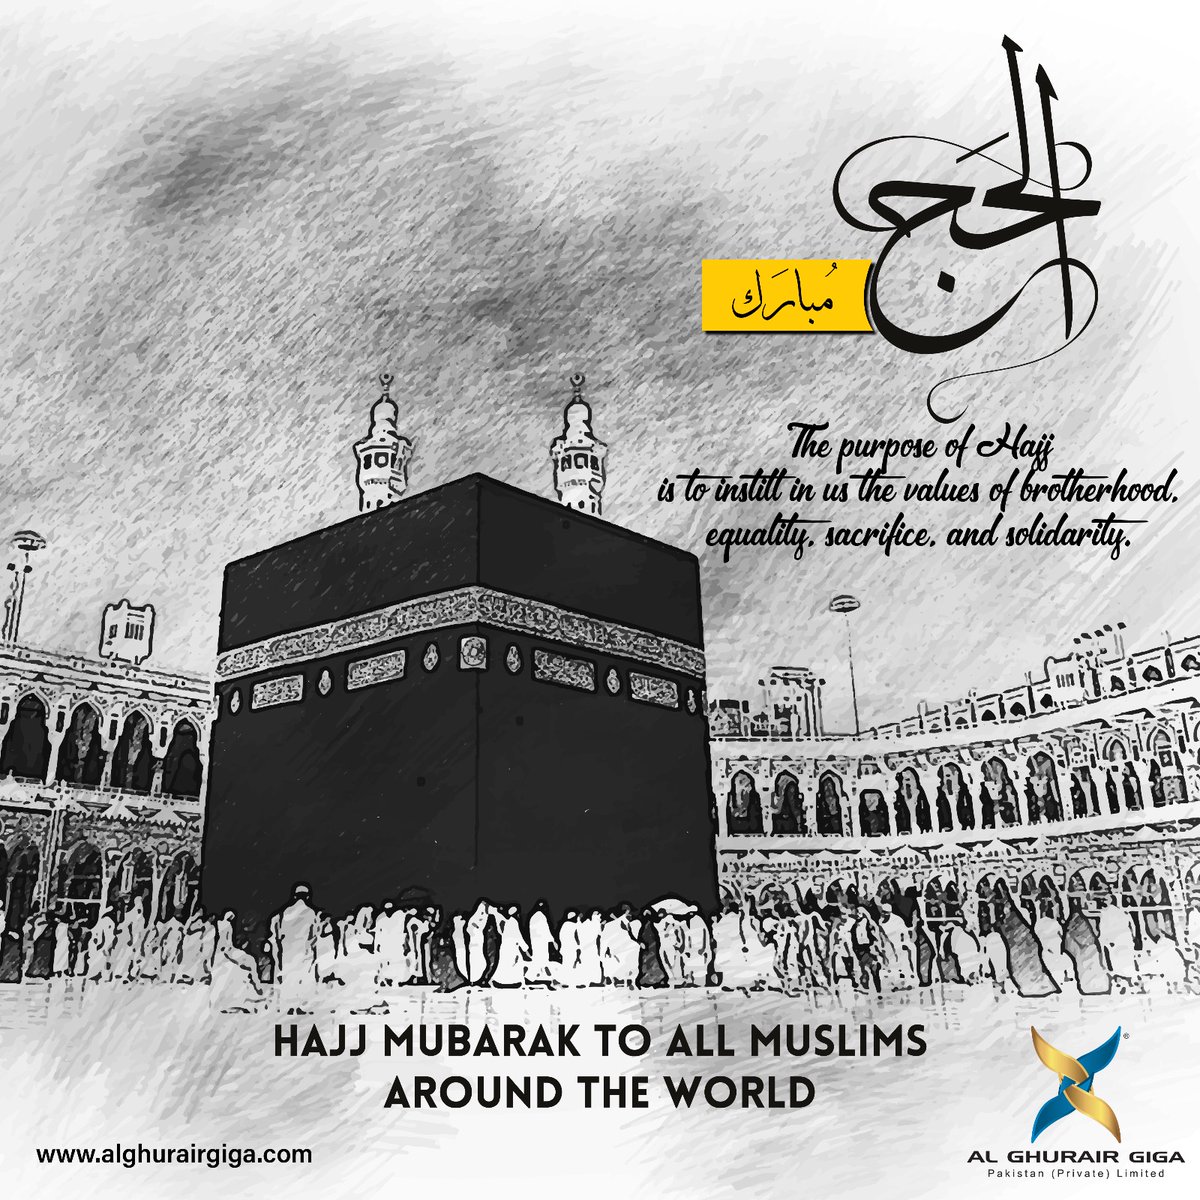 Hajj Mubarak to all Muslims around the World!
The purpose of Hajj is to instill in us the values of brotherhood. equality, sacrifice, and solidarity.
#gigagroup #alghurairgiga #hajj2023 #hajjmubarak  #Hajj2023 
 #حج_1444